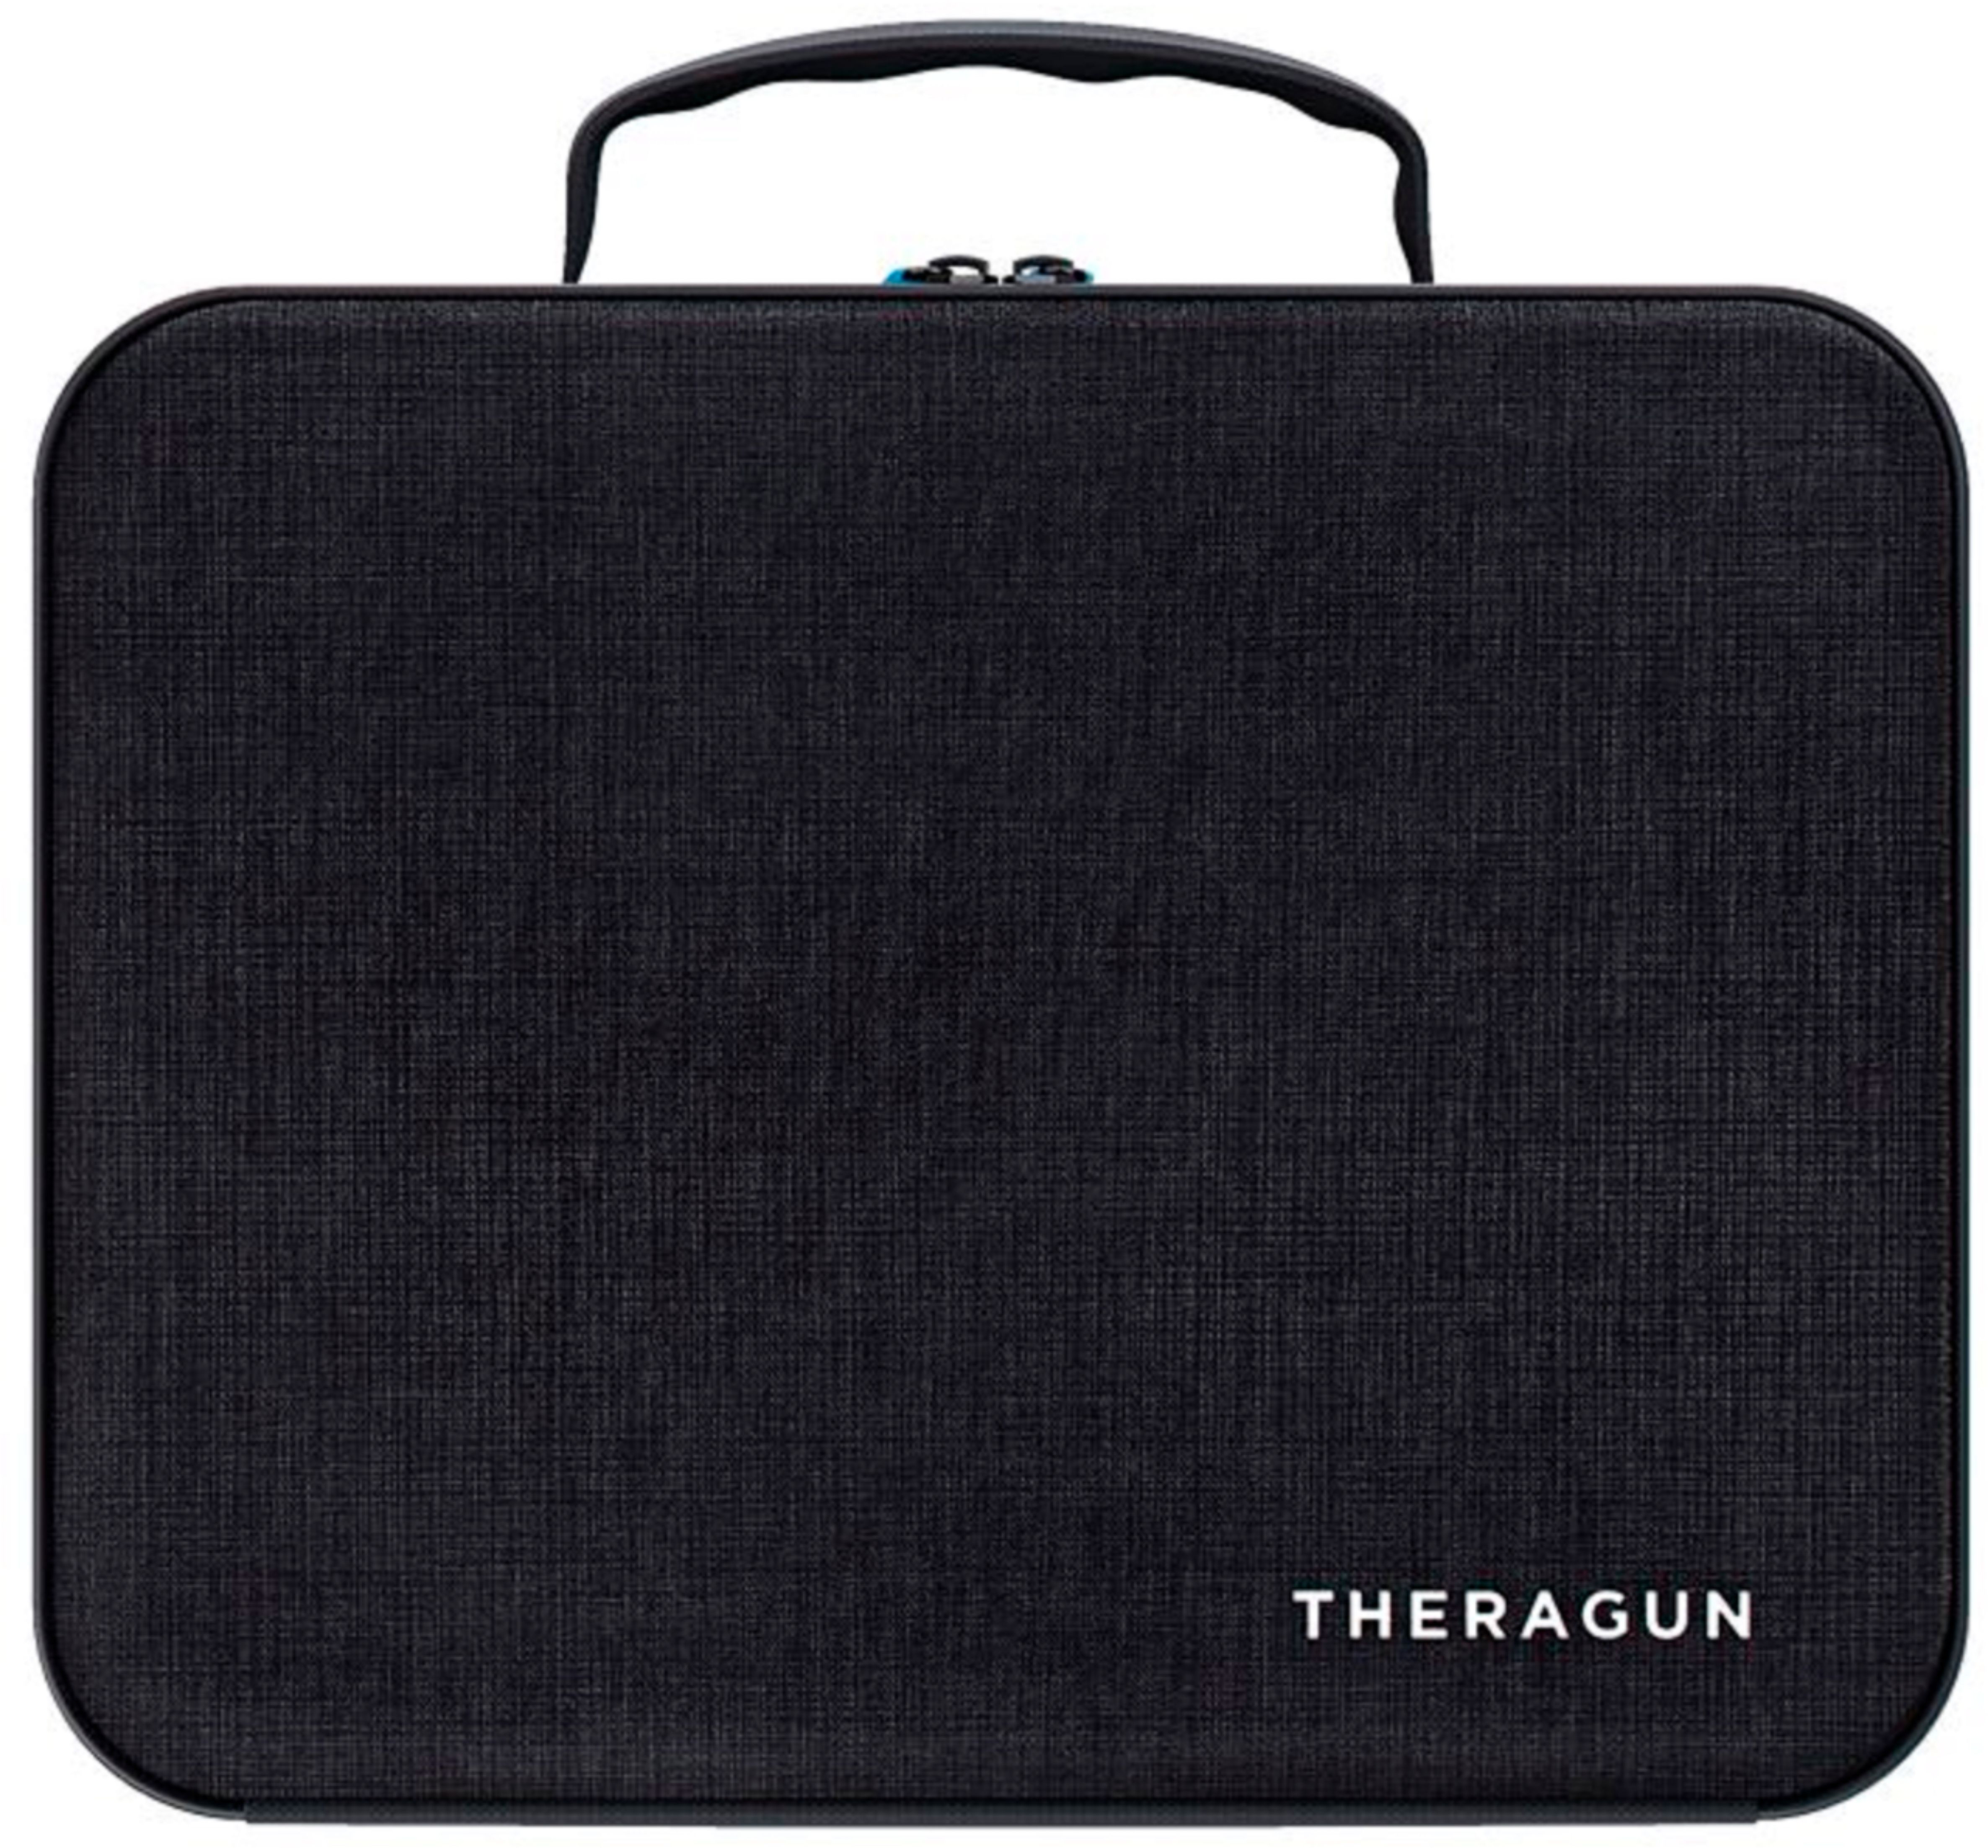 Therabody - Theragun Prime Travel Case - Black